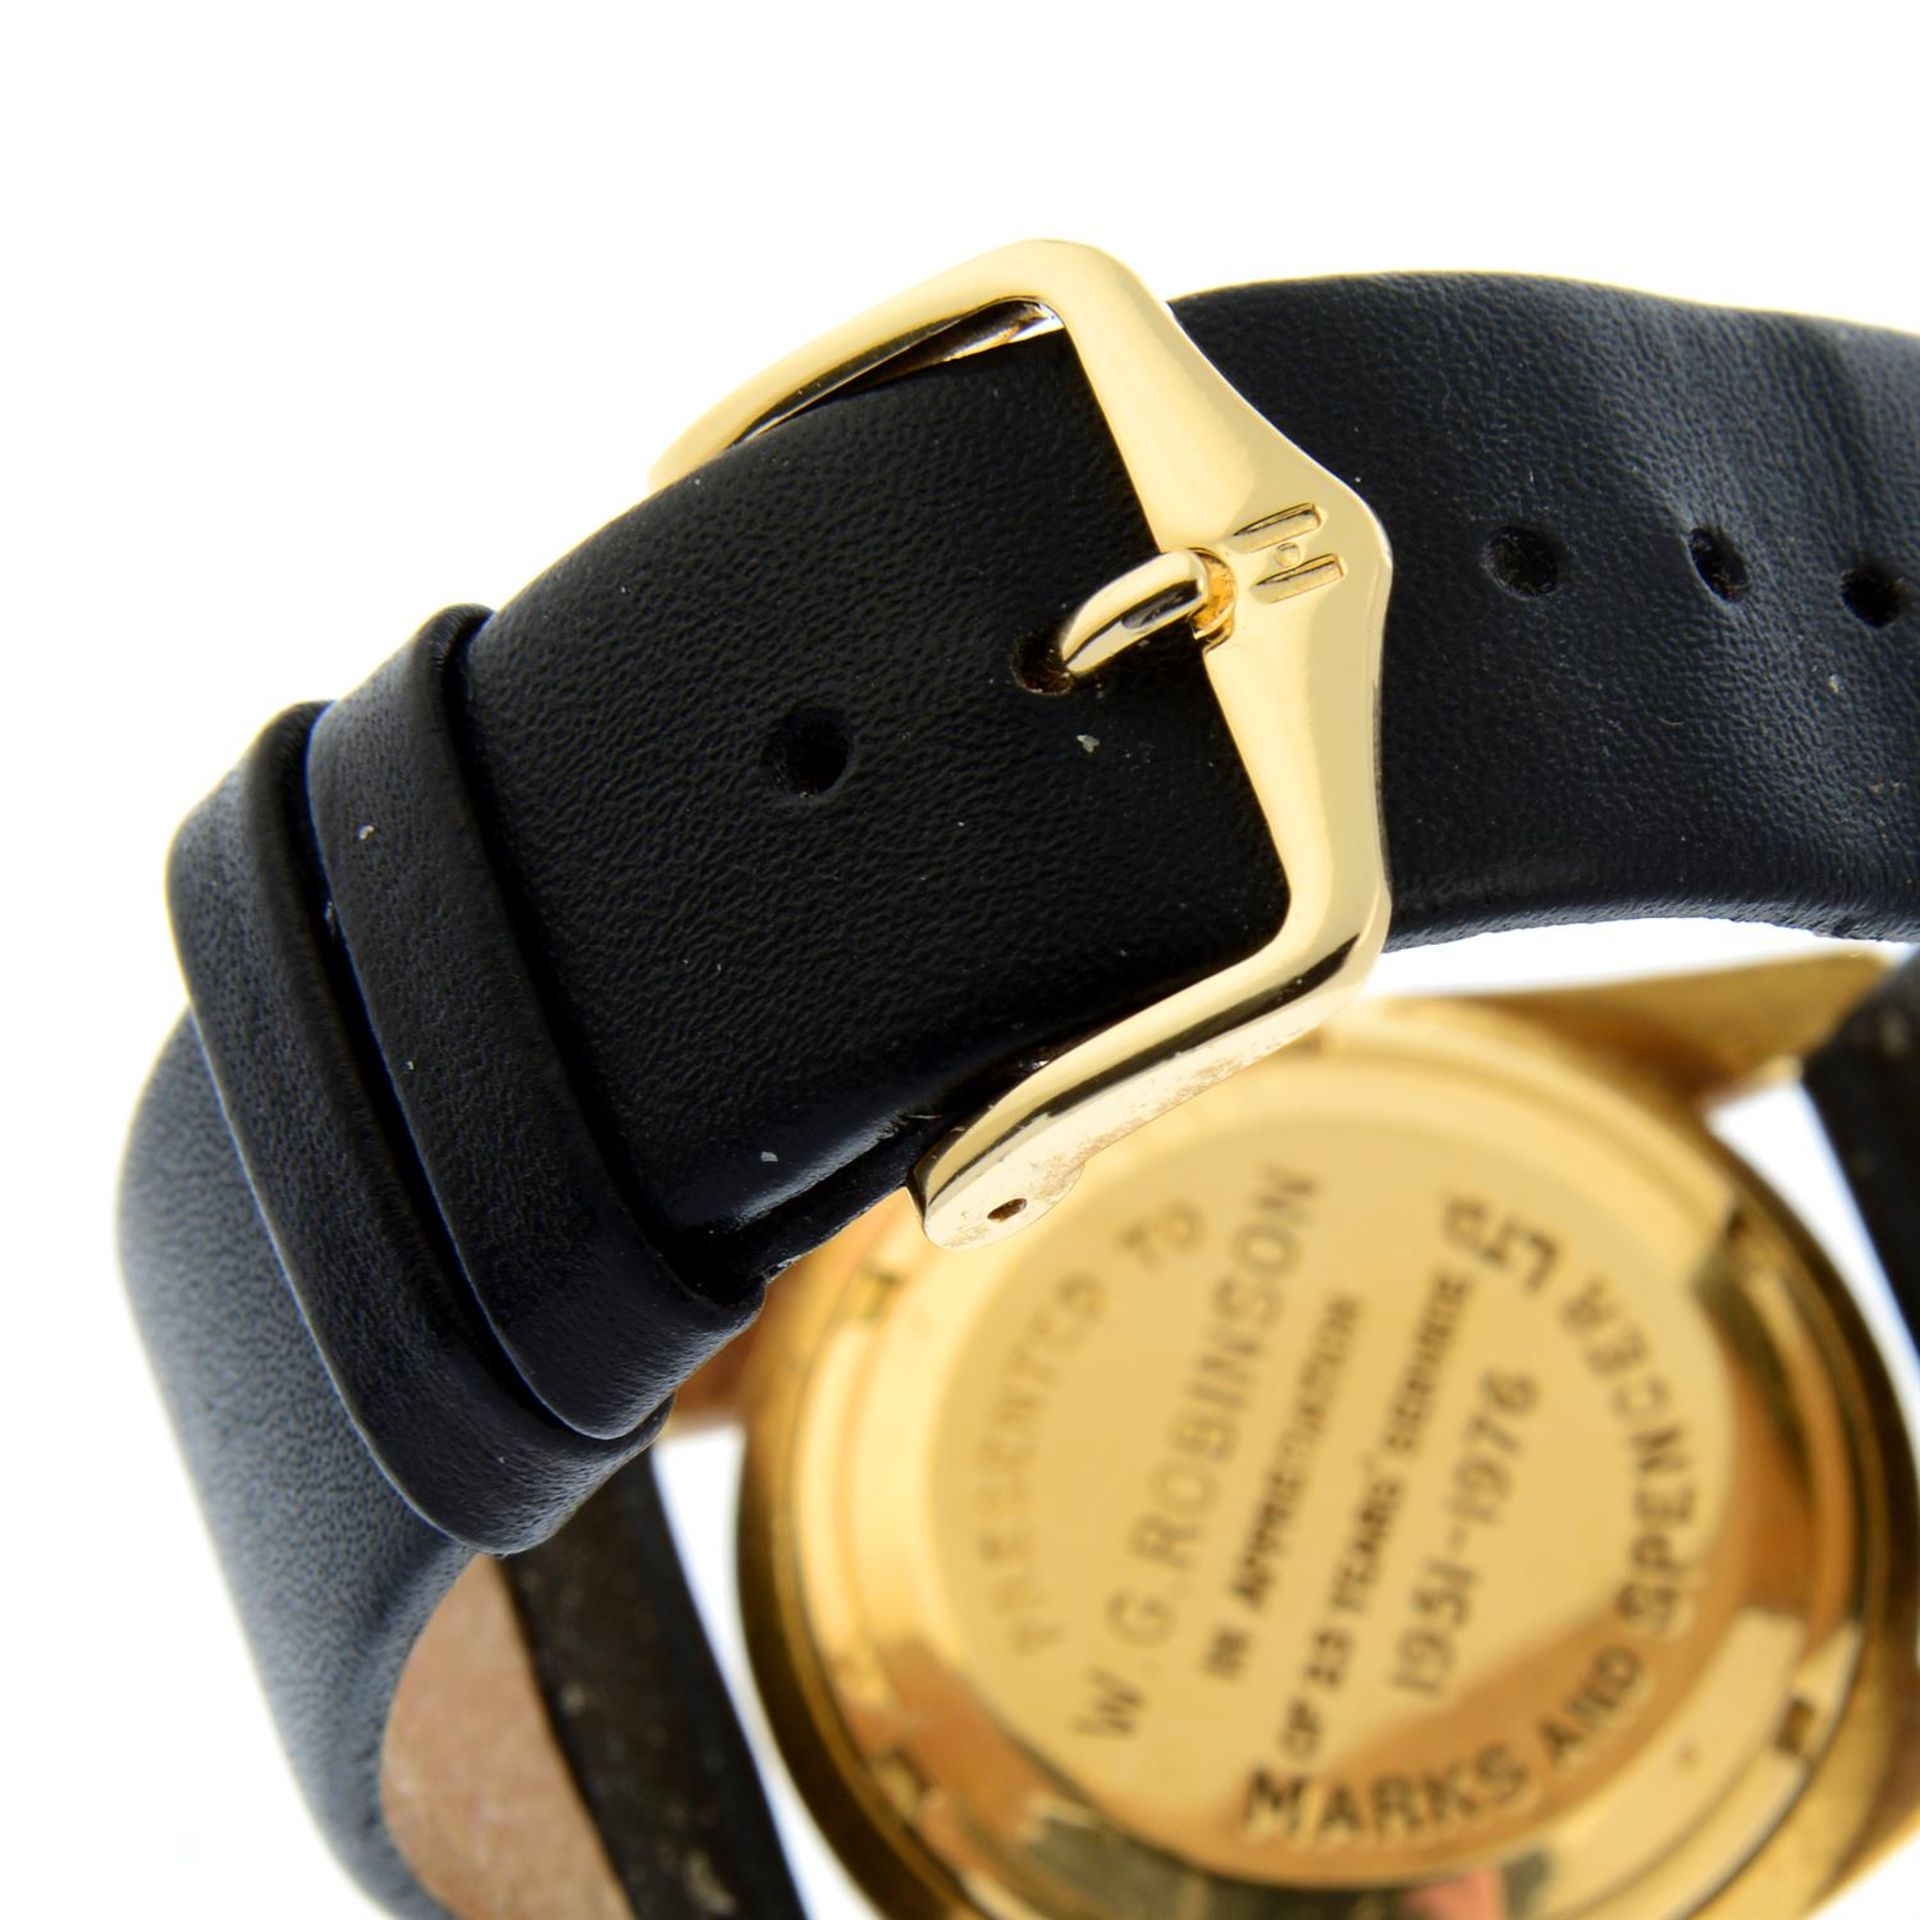 IWC - a yellow metal wrist watch, 36mm. - Image 2 of 5